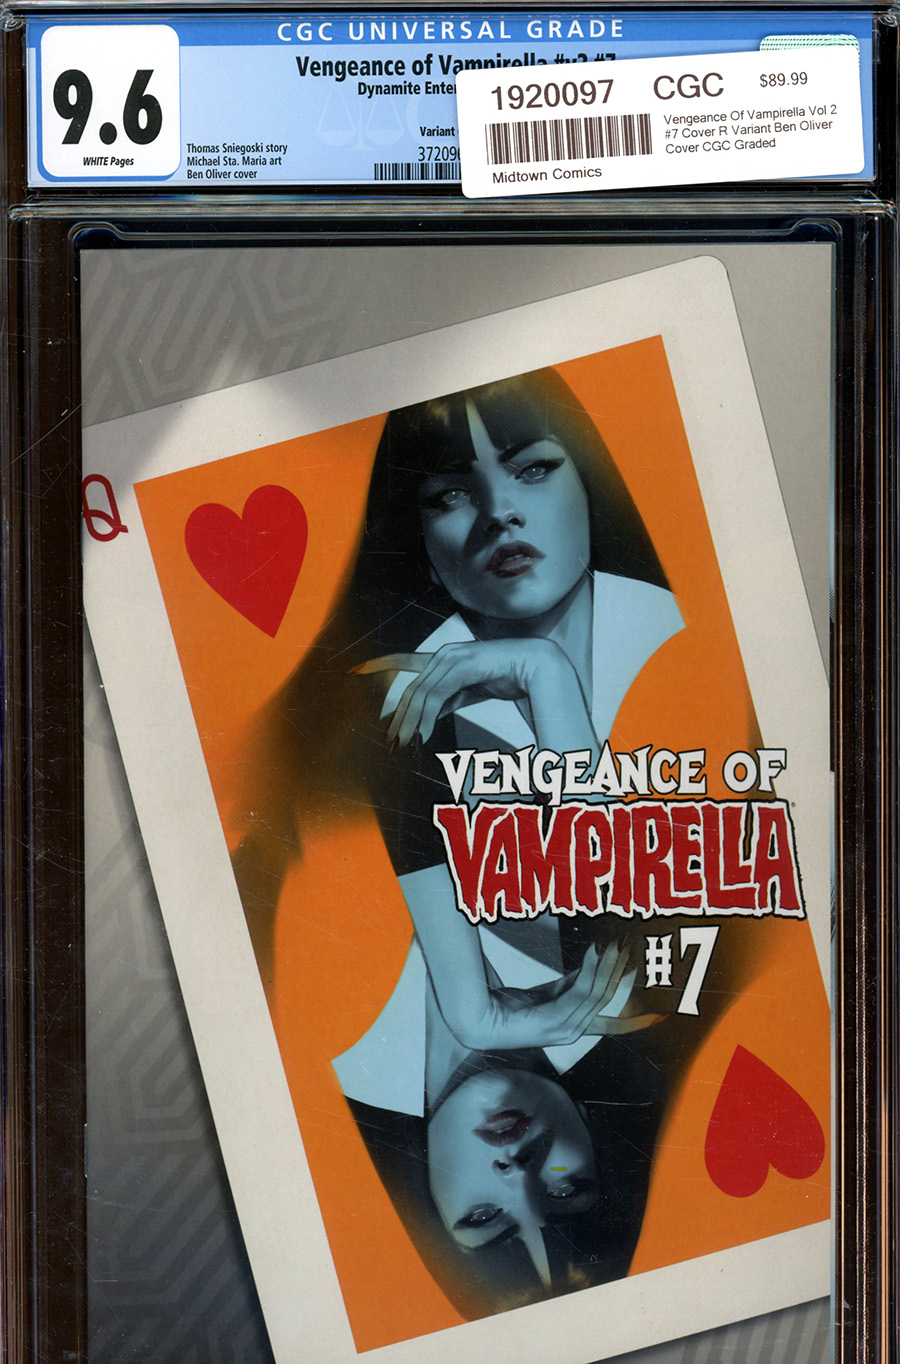 Vengeance Of Vampirella Vol 2 #7 Cover R Variant Ben Oliver Cover CGC Graded